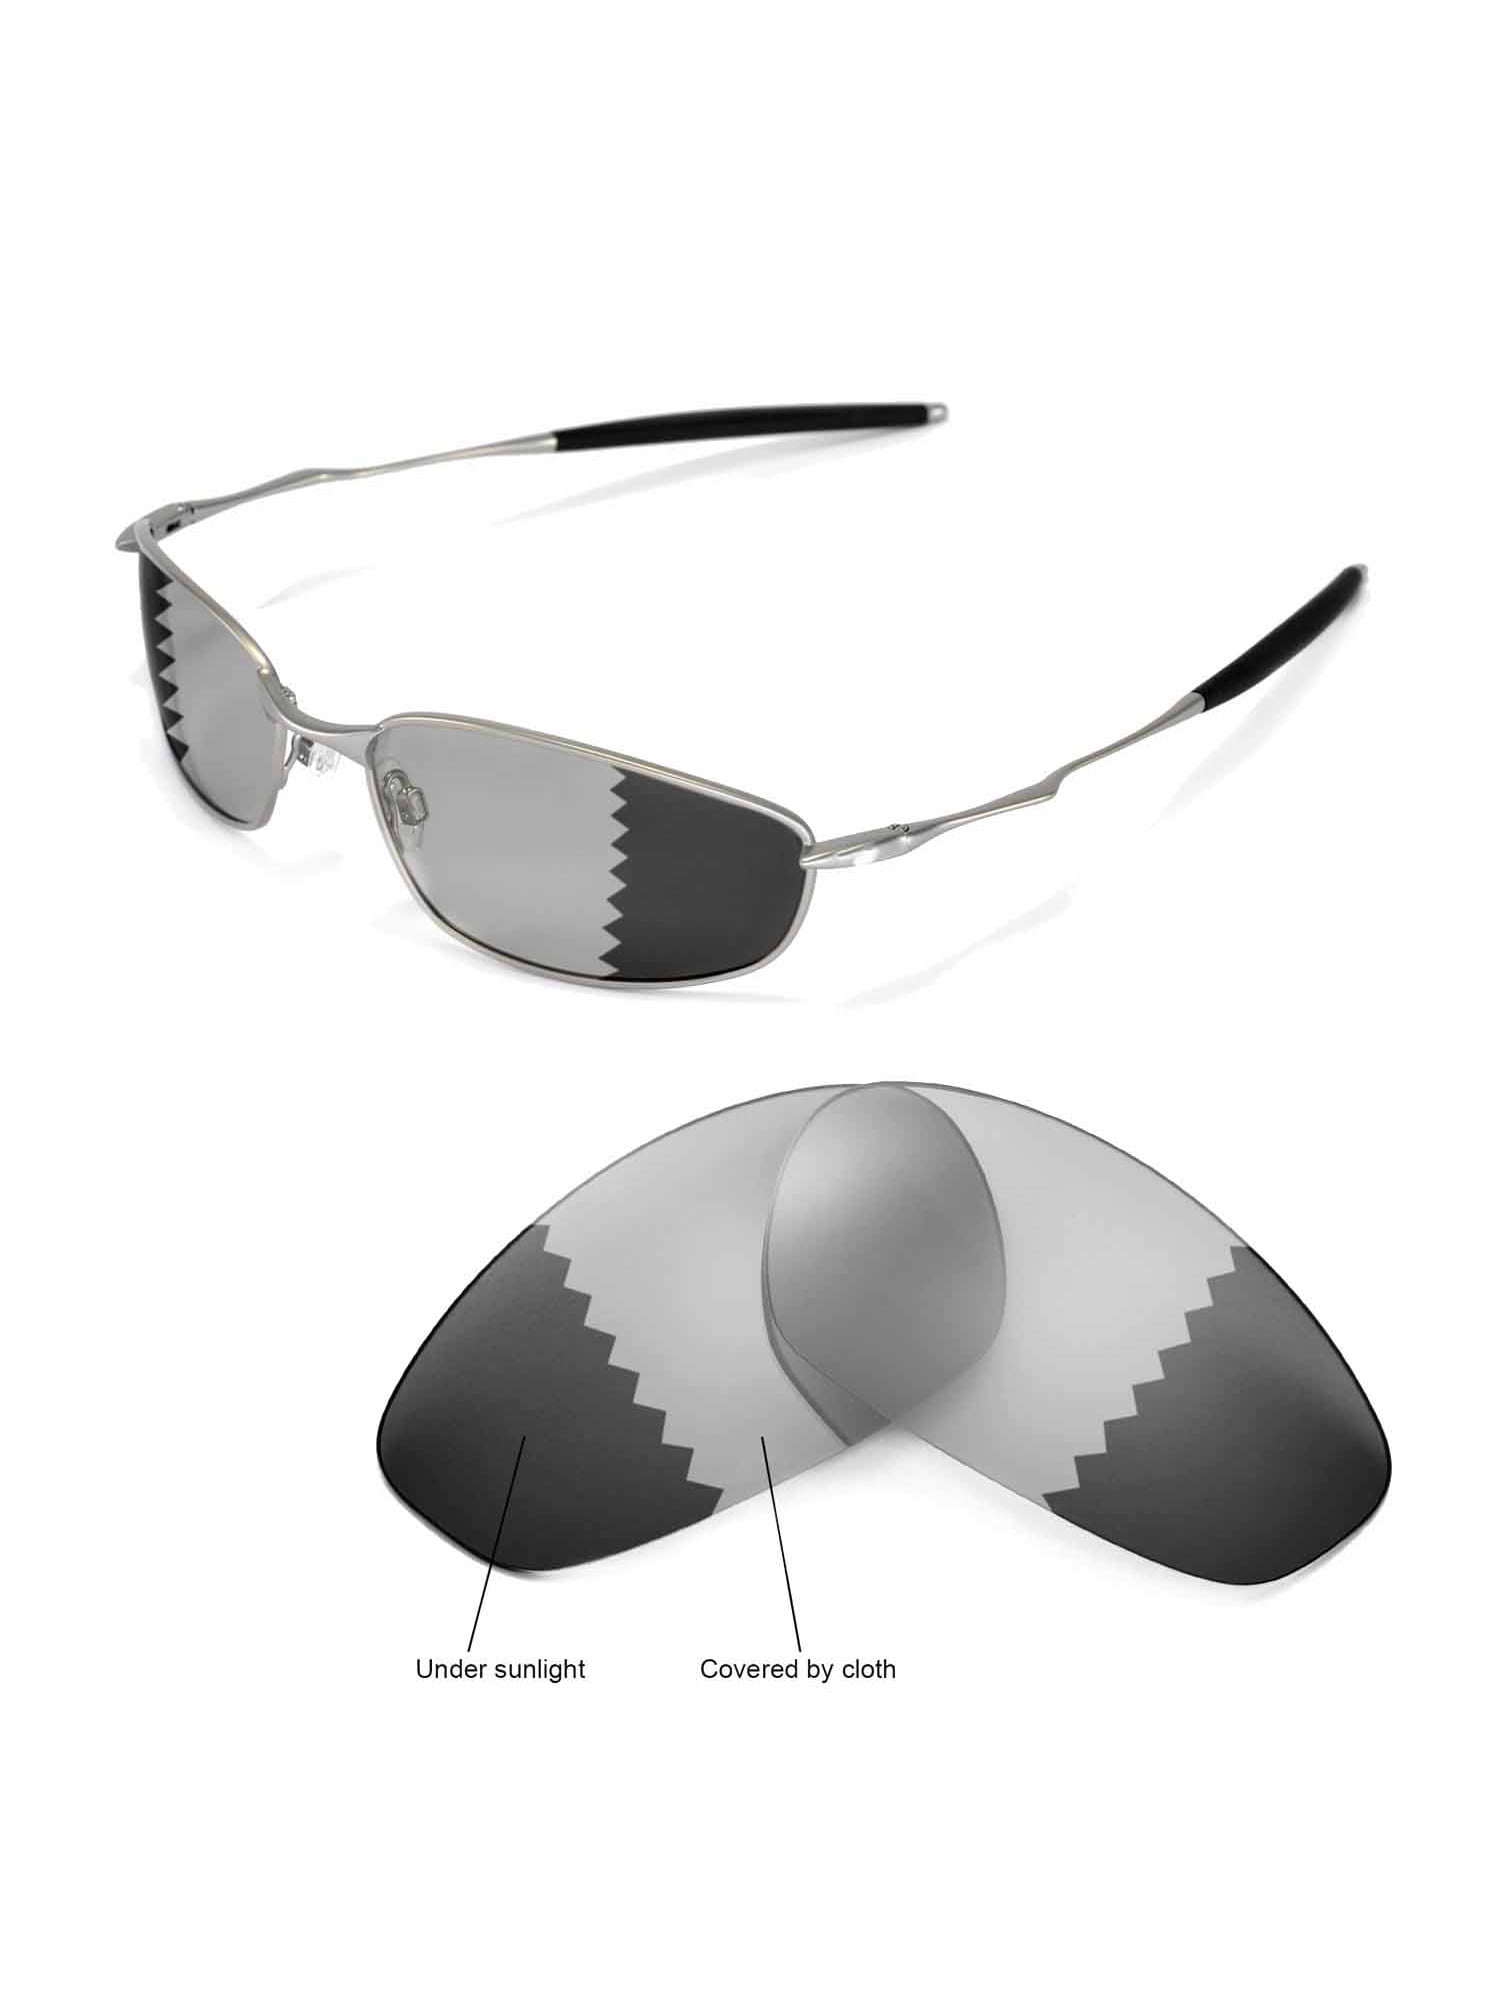 Walleva Transition/Photochromic Polarized Replacement Lenses for Oakley  Whisker Sunglasses 